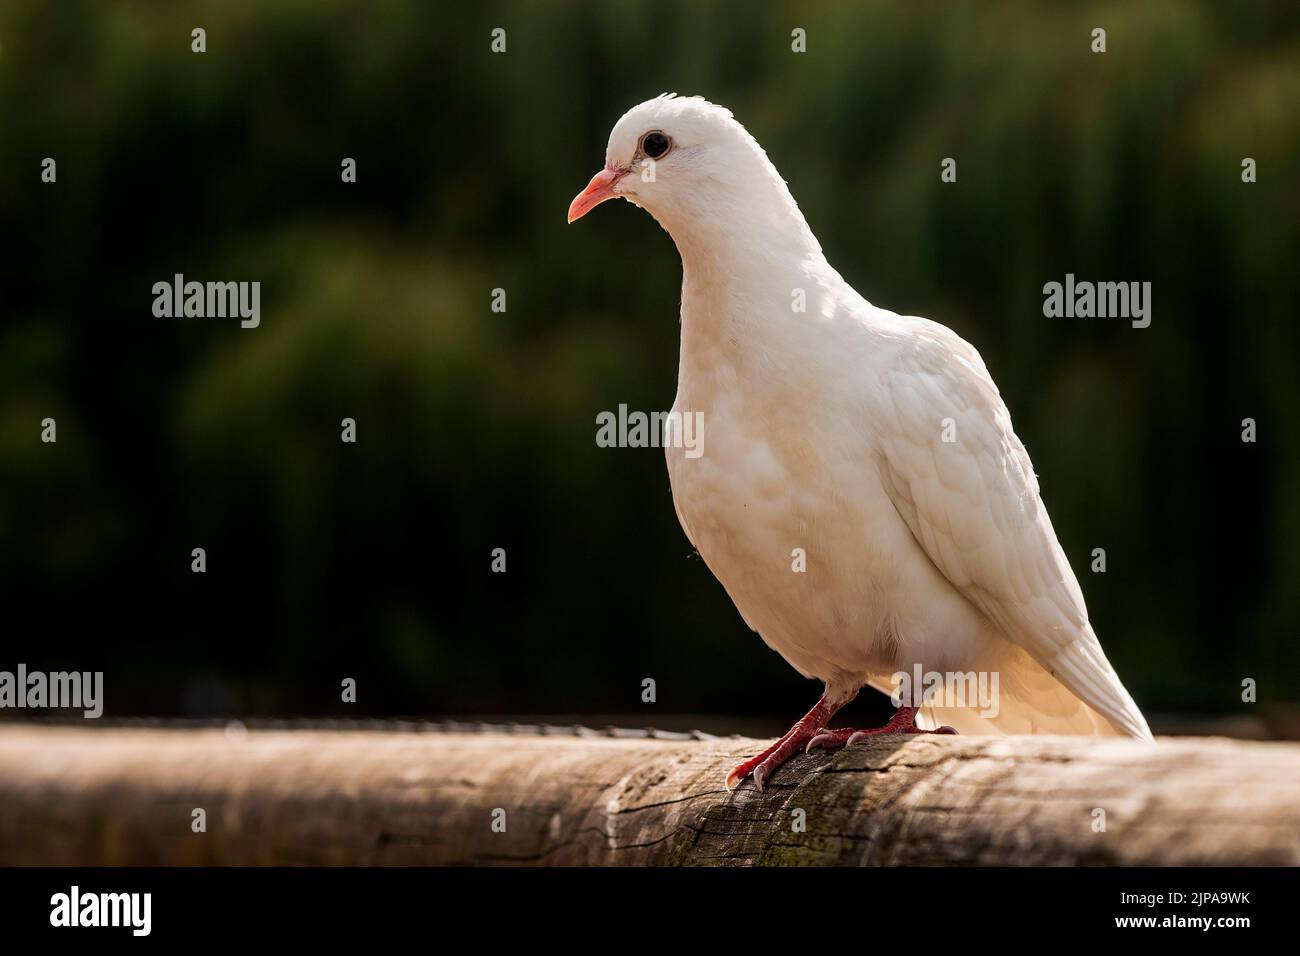 White pigeon.Dove Stock Photo